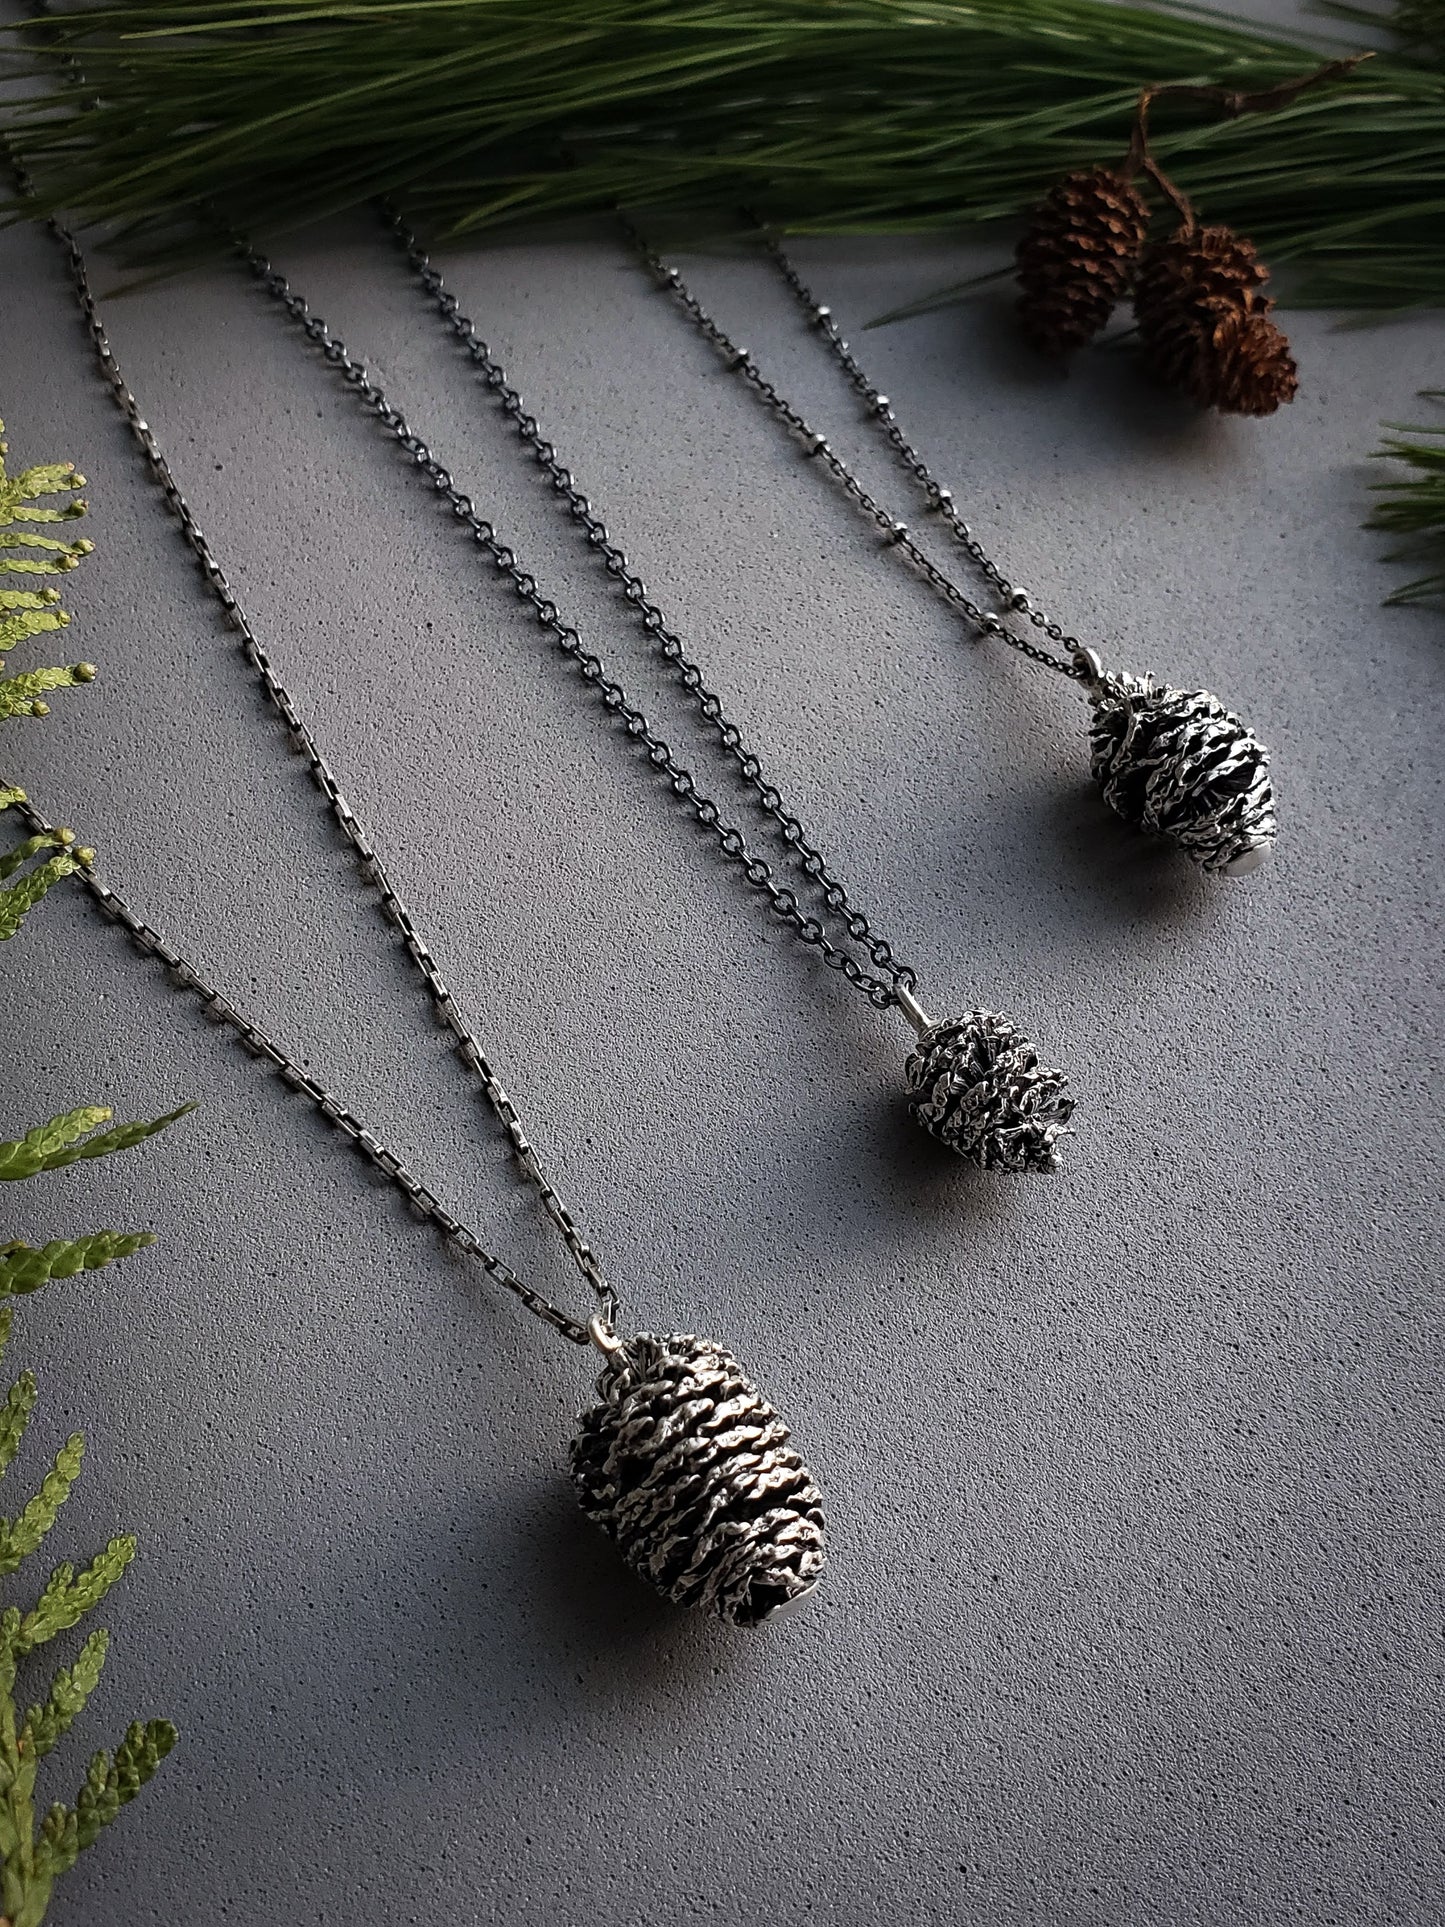 Pine Cone Necklace